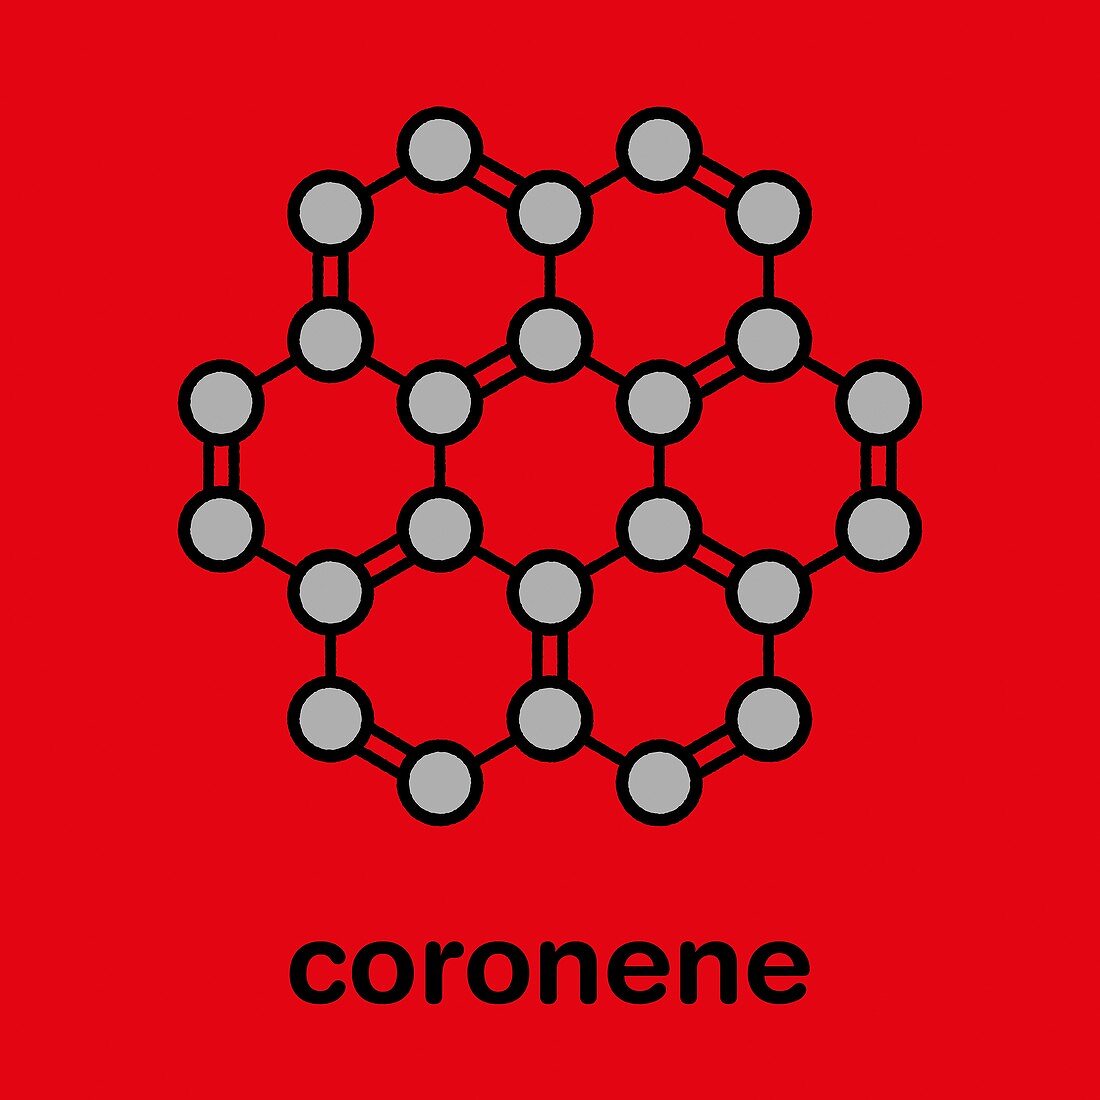 Coronene polyaromatic hydrocarbon molecule, illustration